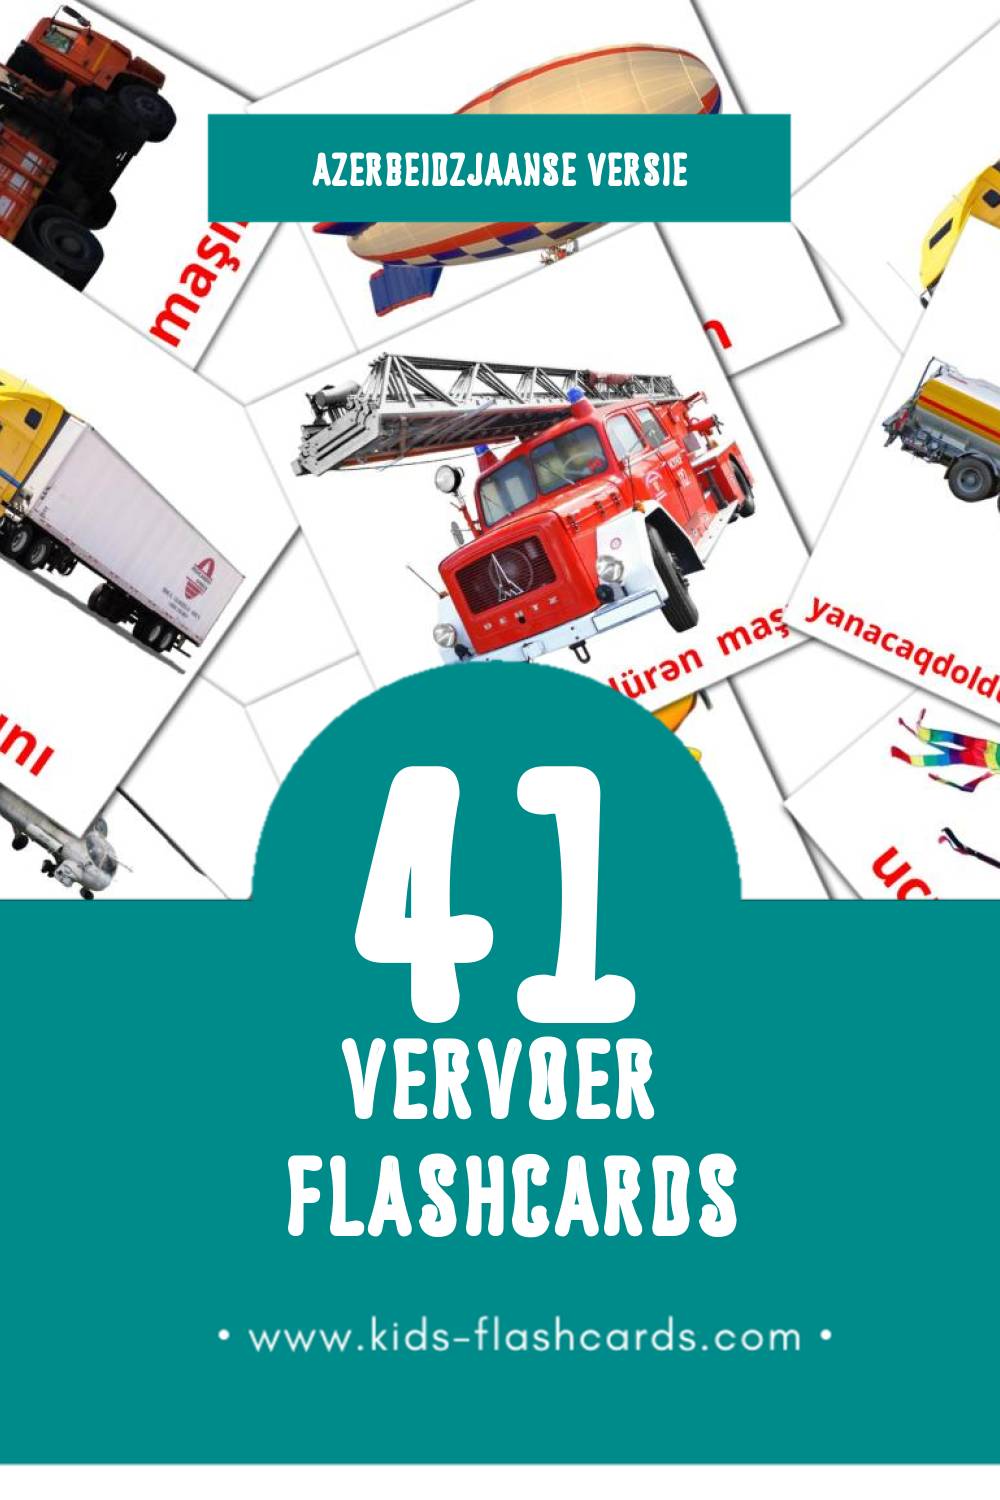 Visuele ջրային տրանսպորտ Flashcards voor Kleuters (41 kaarten in het Azerbeidzjaans)